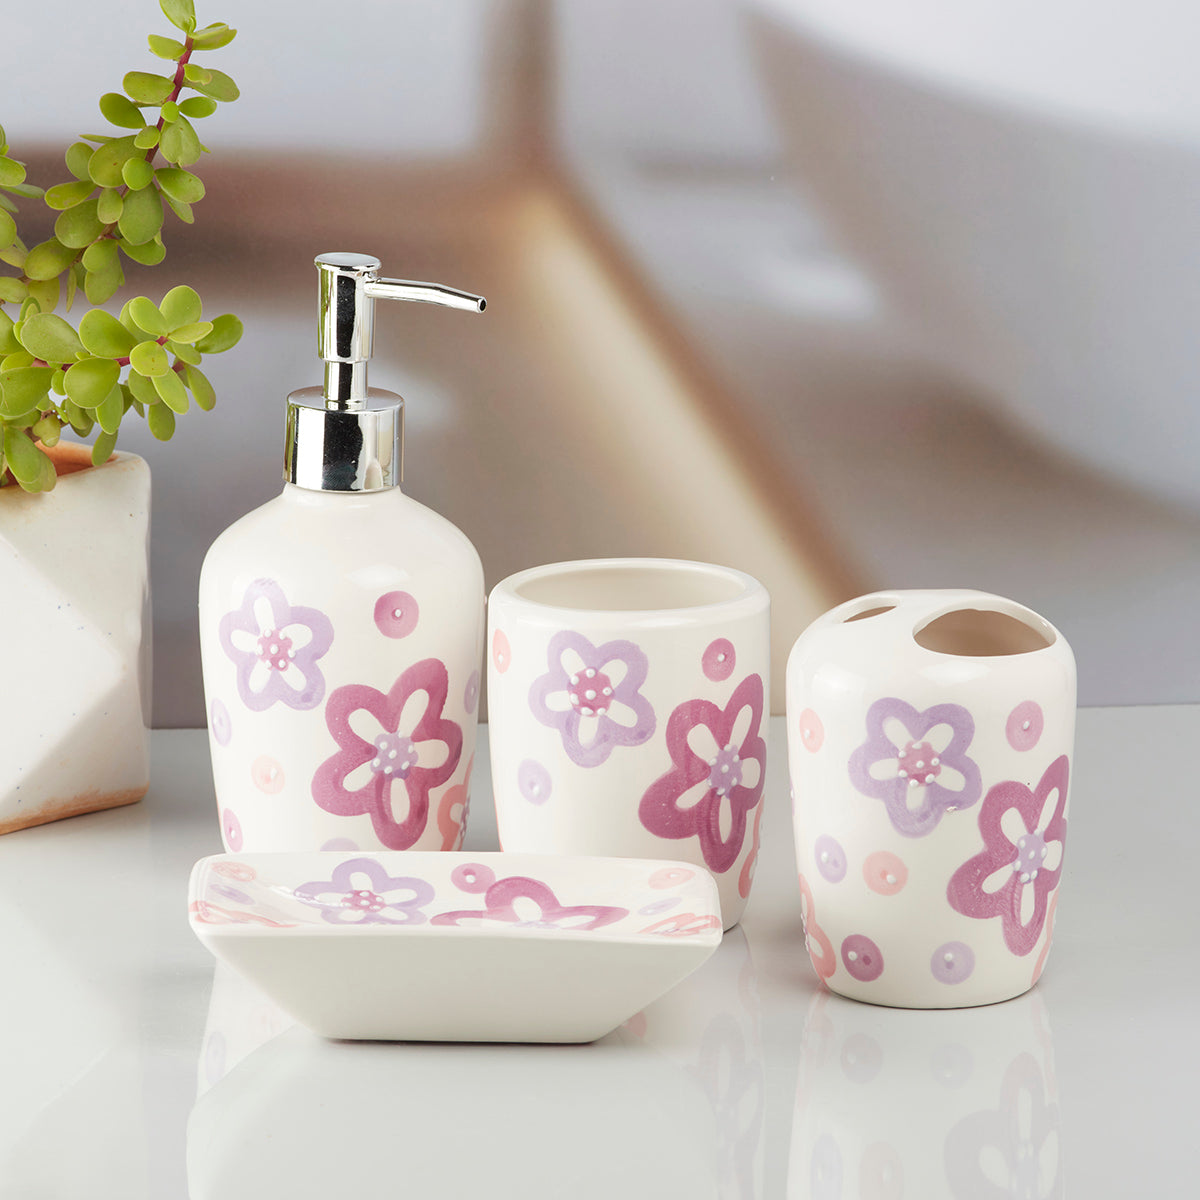 Ceramic Bathroom Accessories Set of 4 Bath Set with Soap Dispenser (10213)